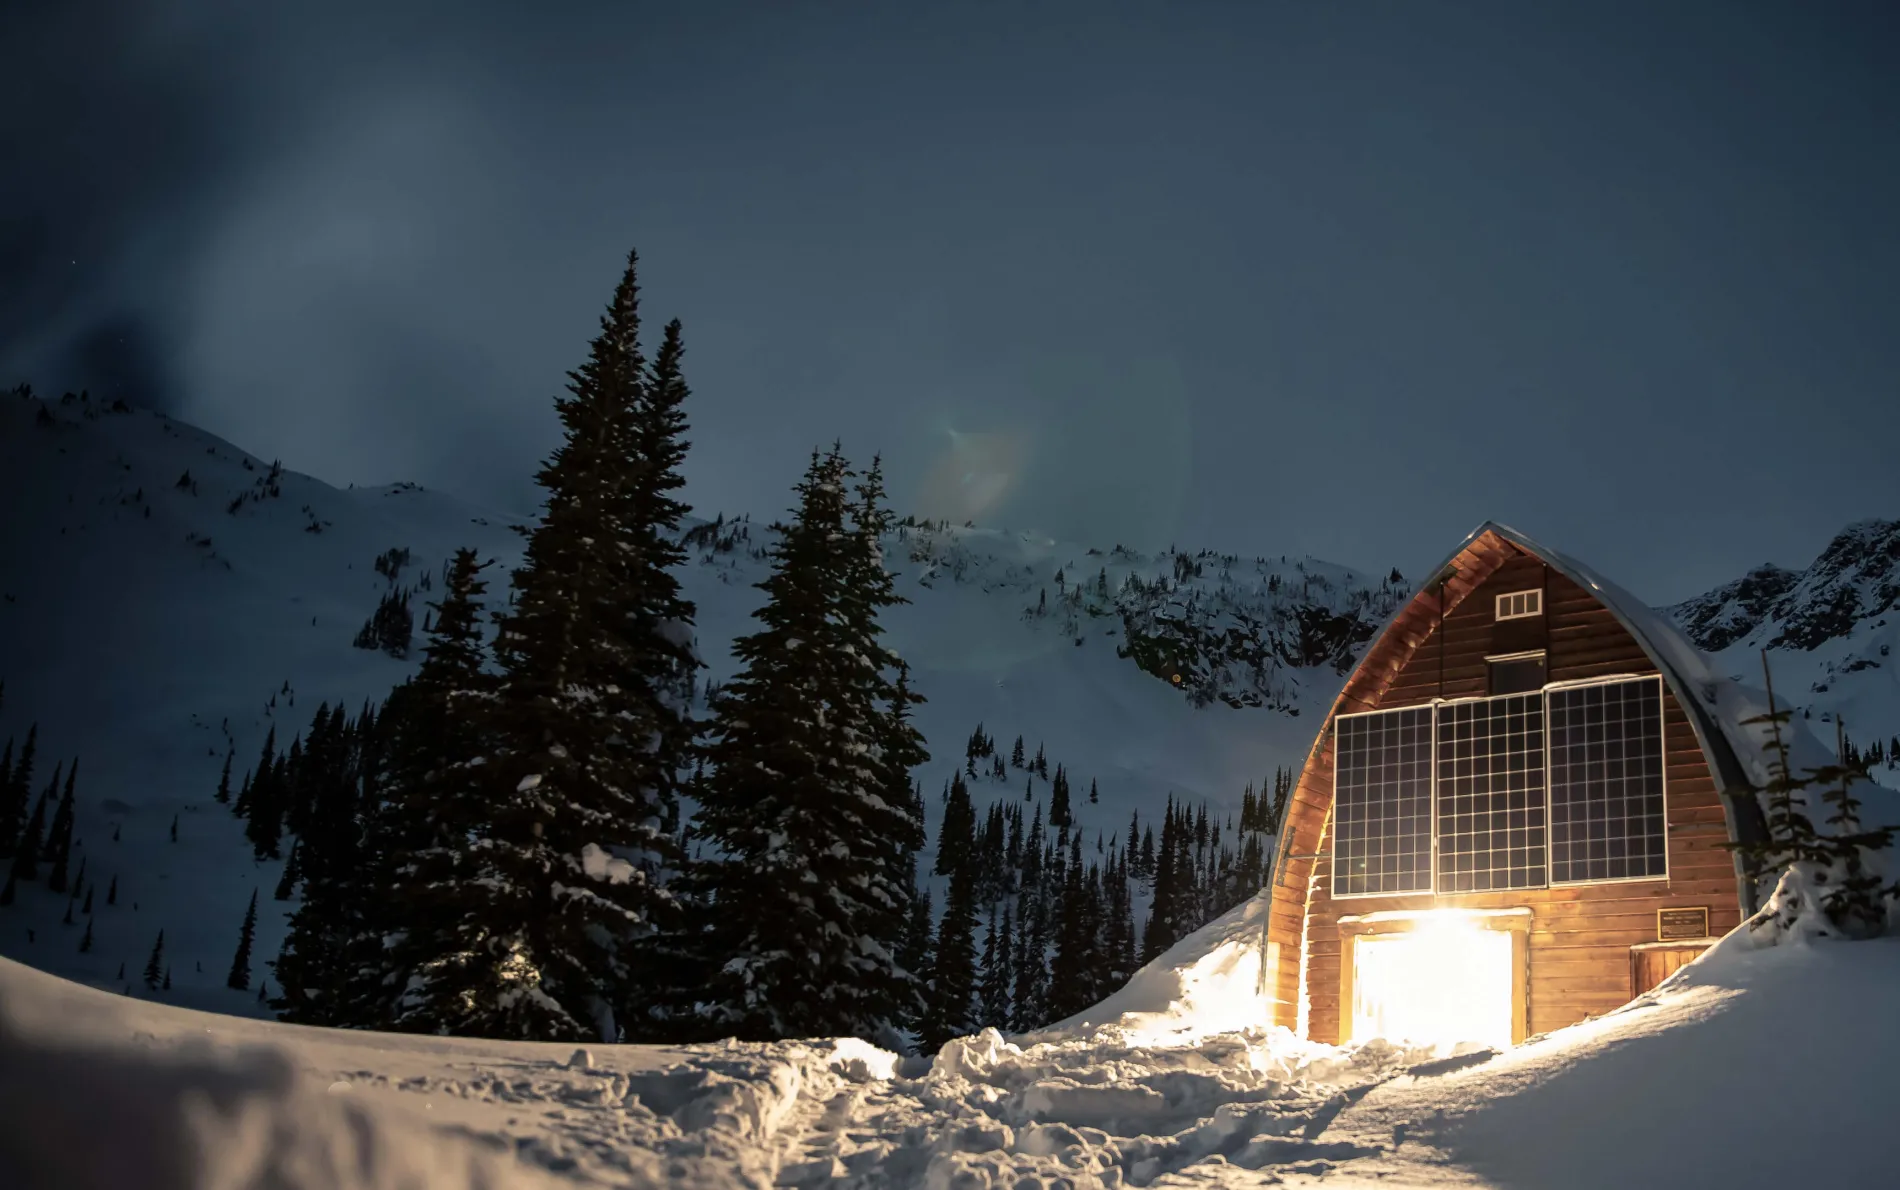 backcountry hut at night